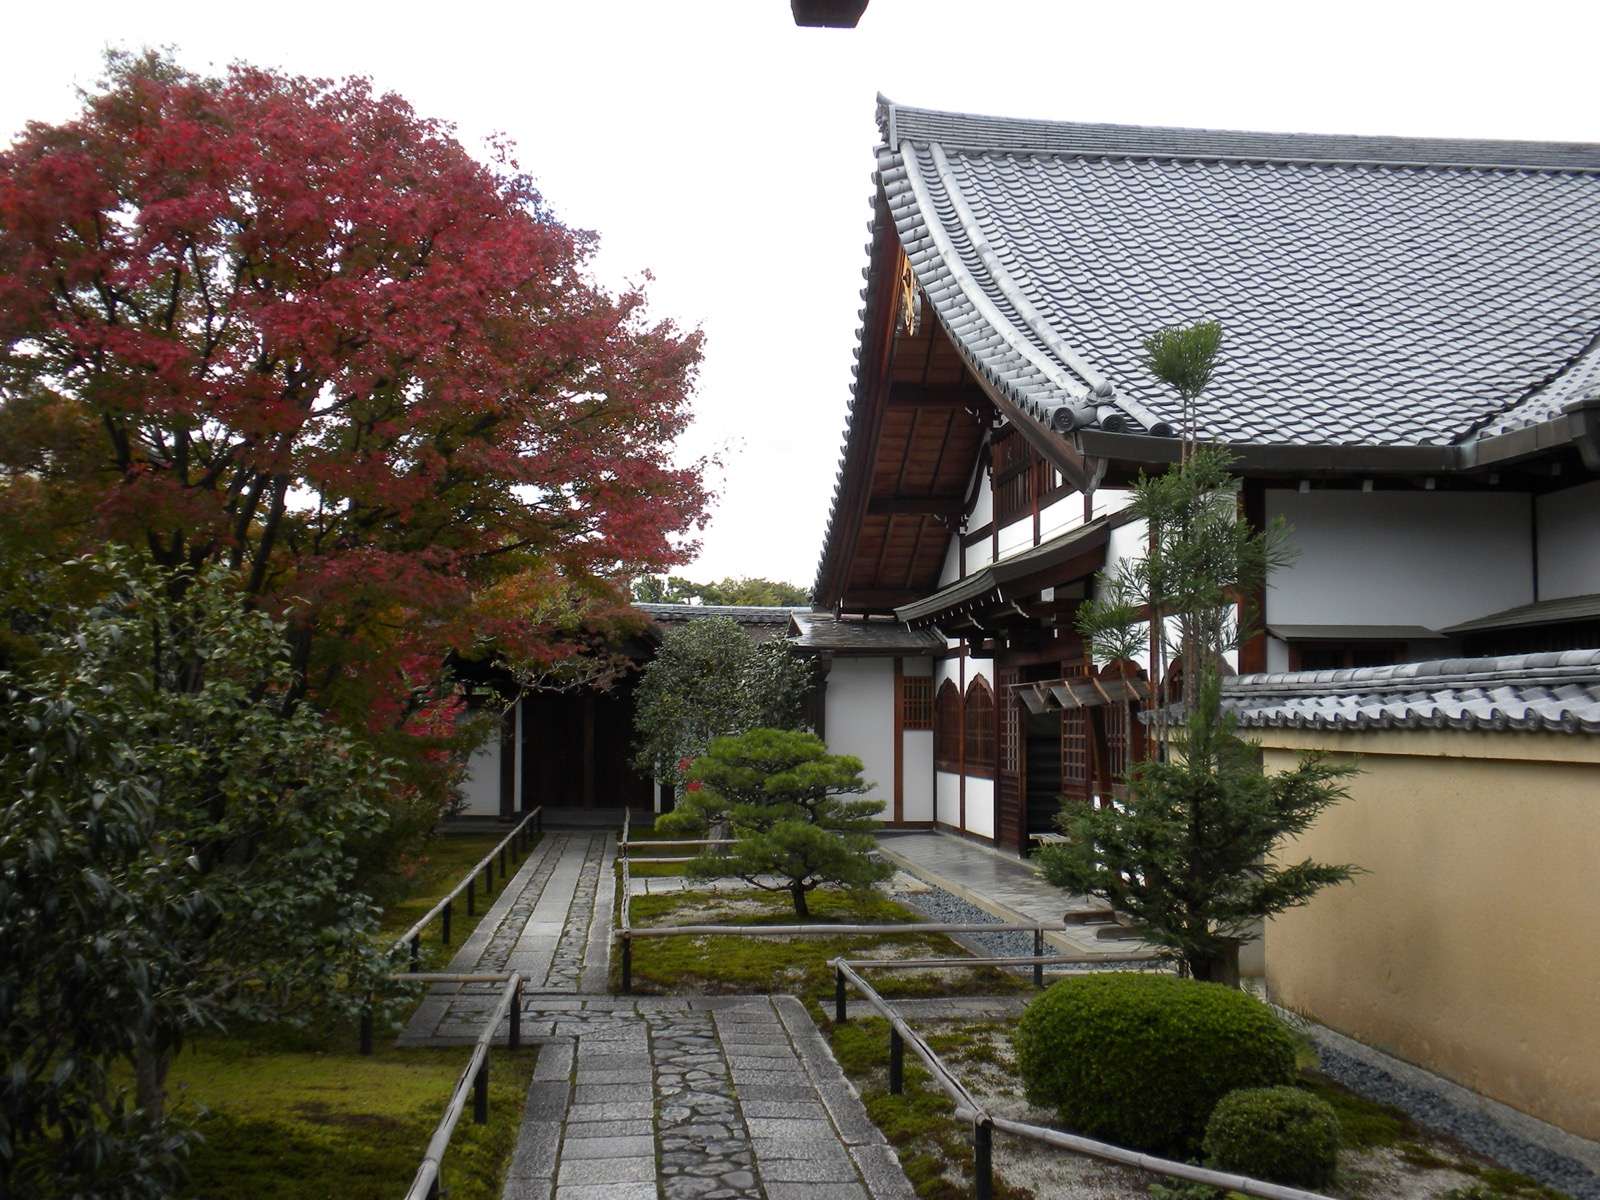 Photo of Daitokuji Temple, Japan (Daitoku-ji, Kyoto by np&djjewell)